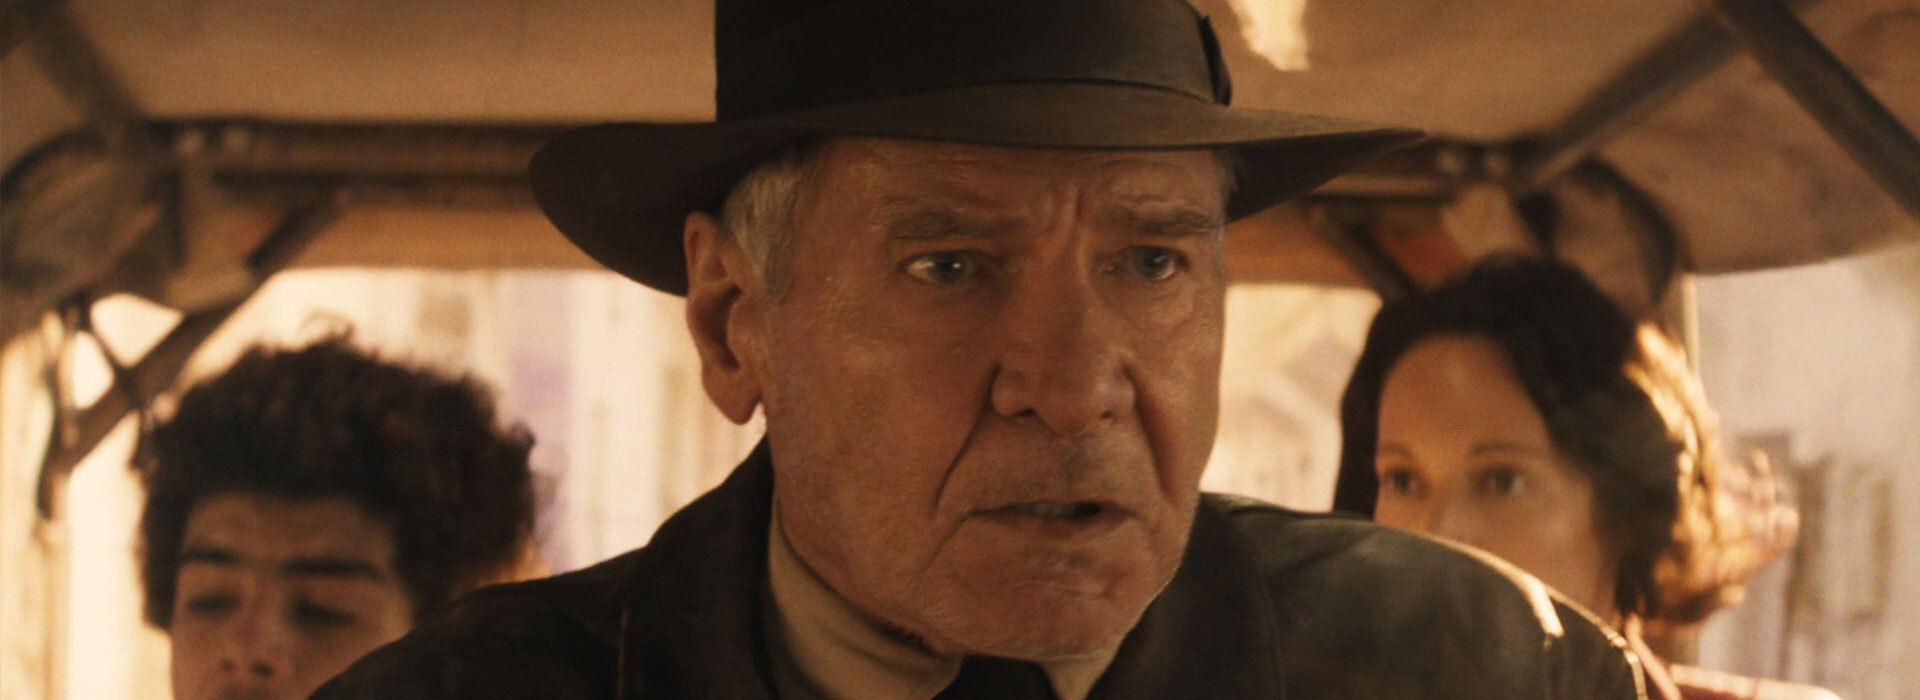 ‘Indiana Jones’: Hollywood cheira a mofo